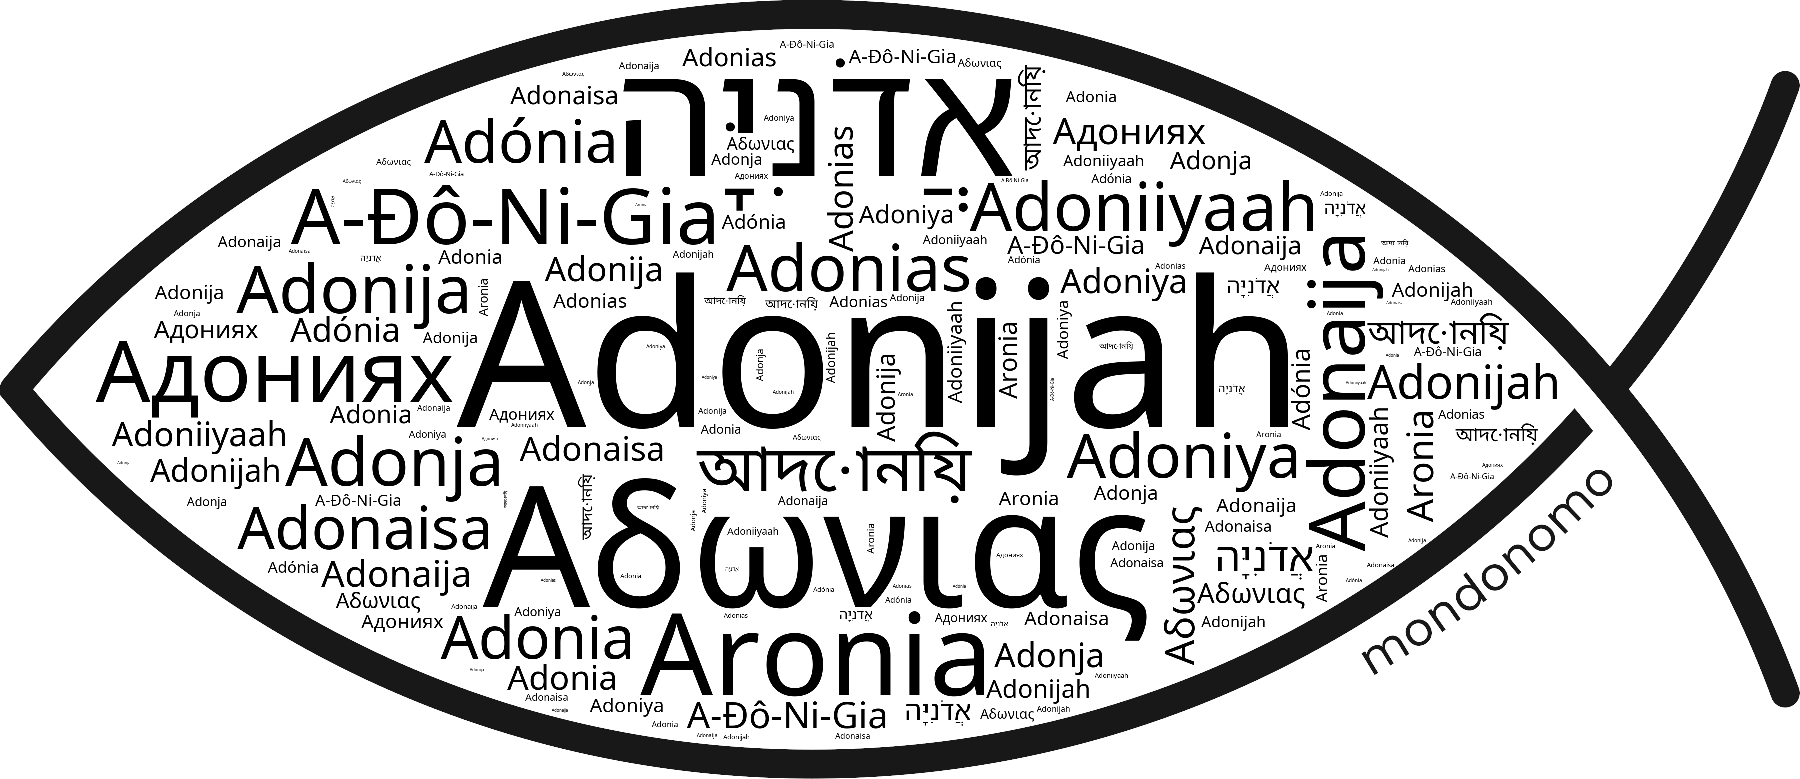 Name Adonijah in the world's Bibles